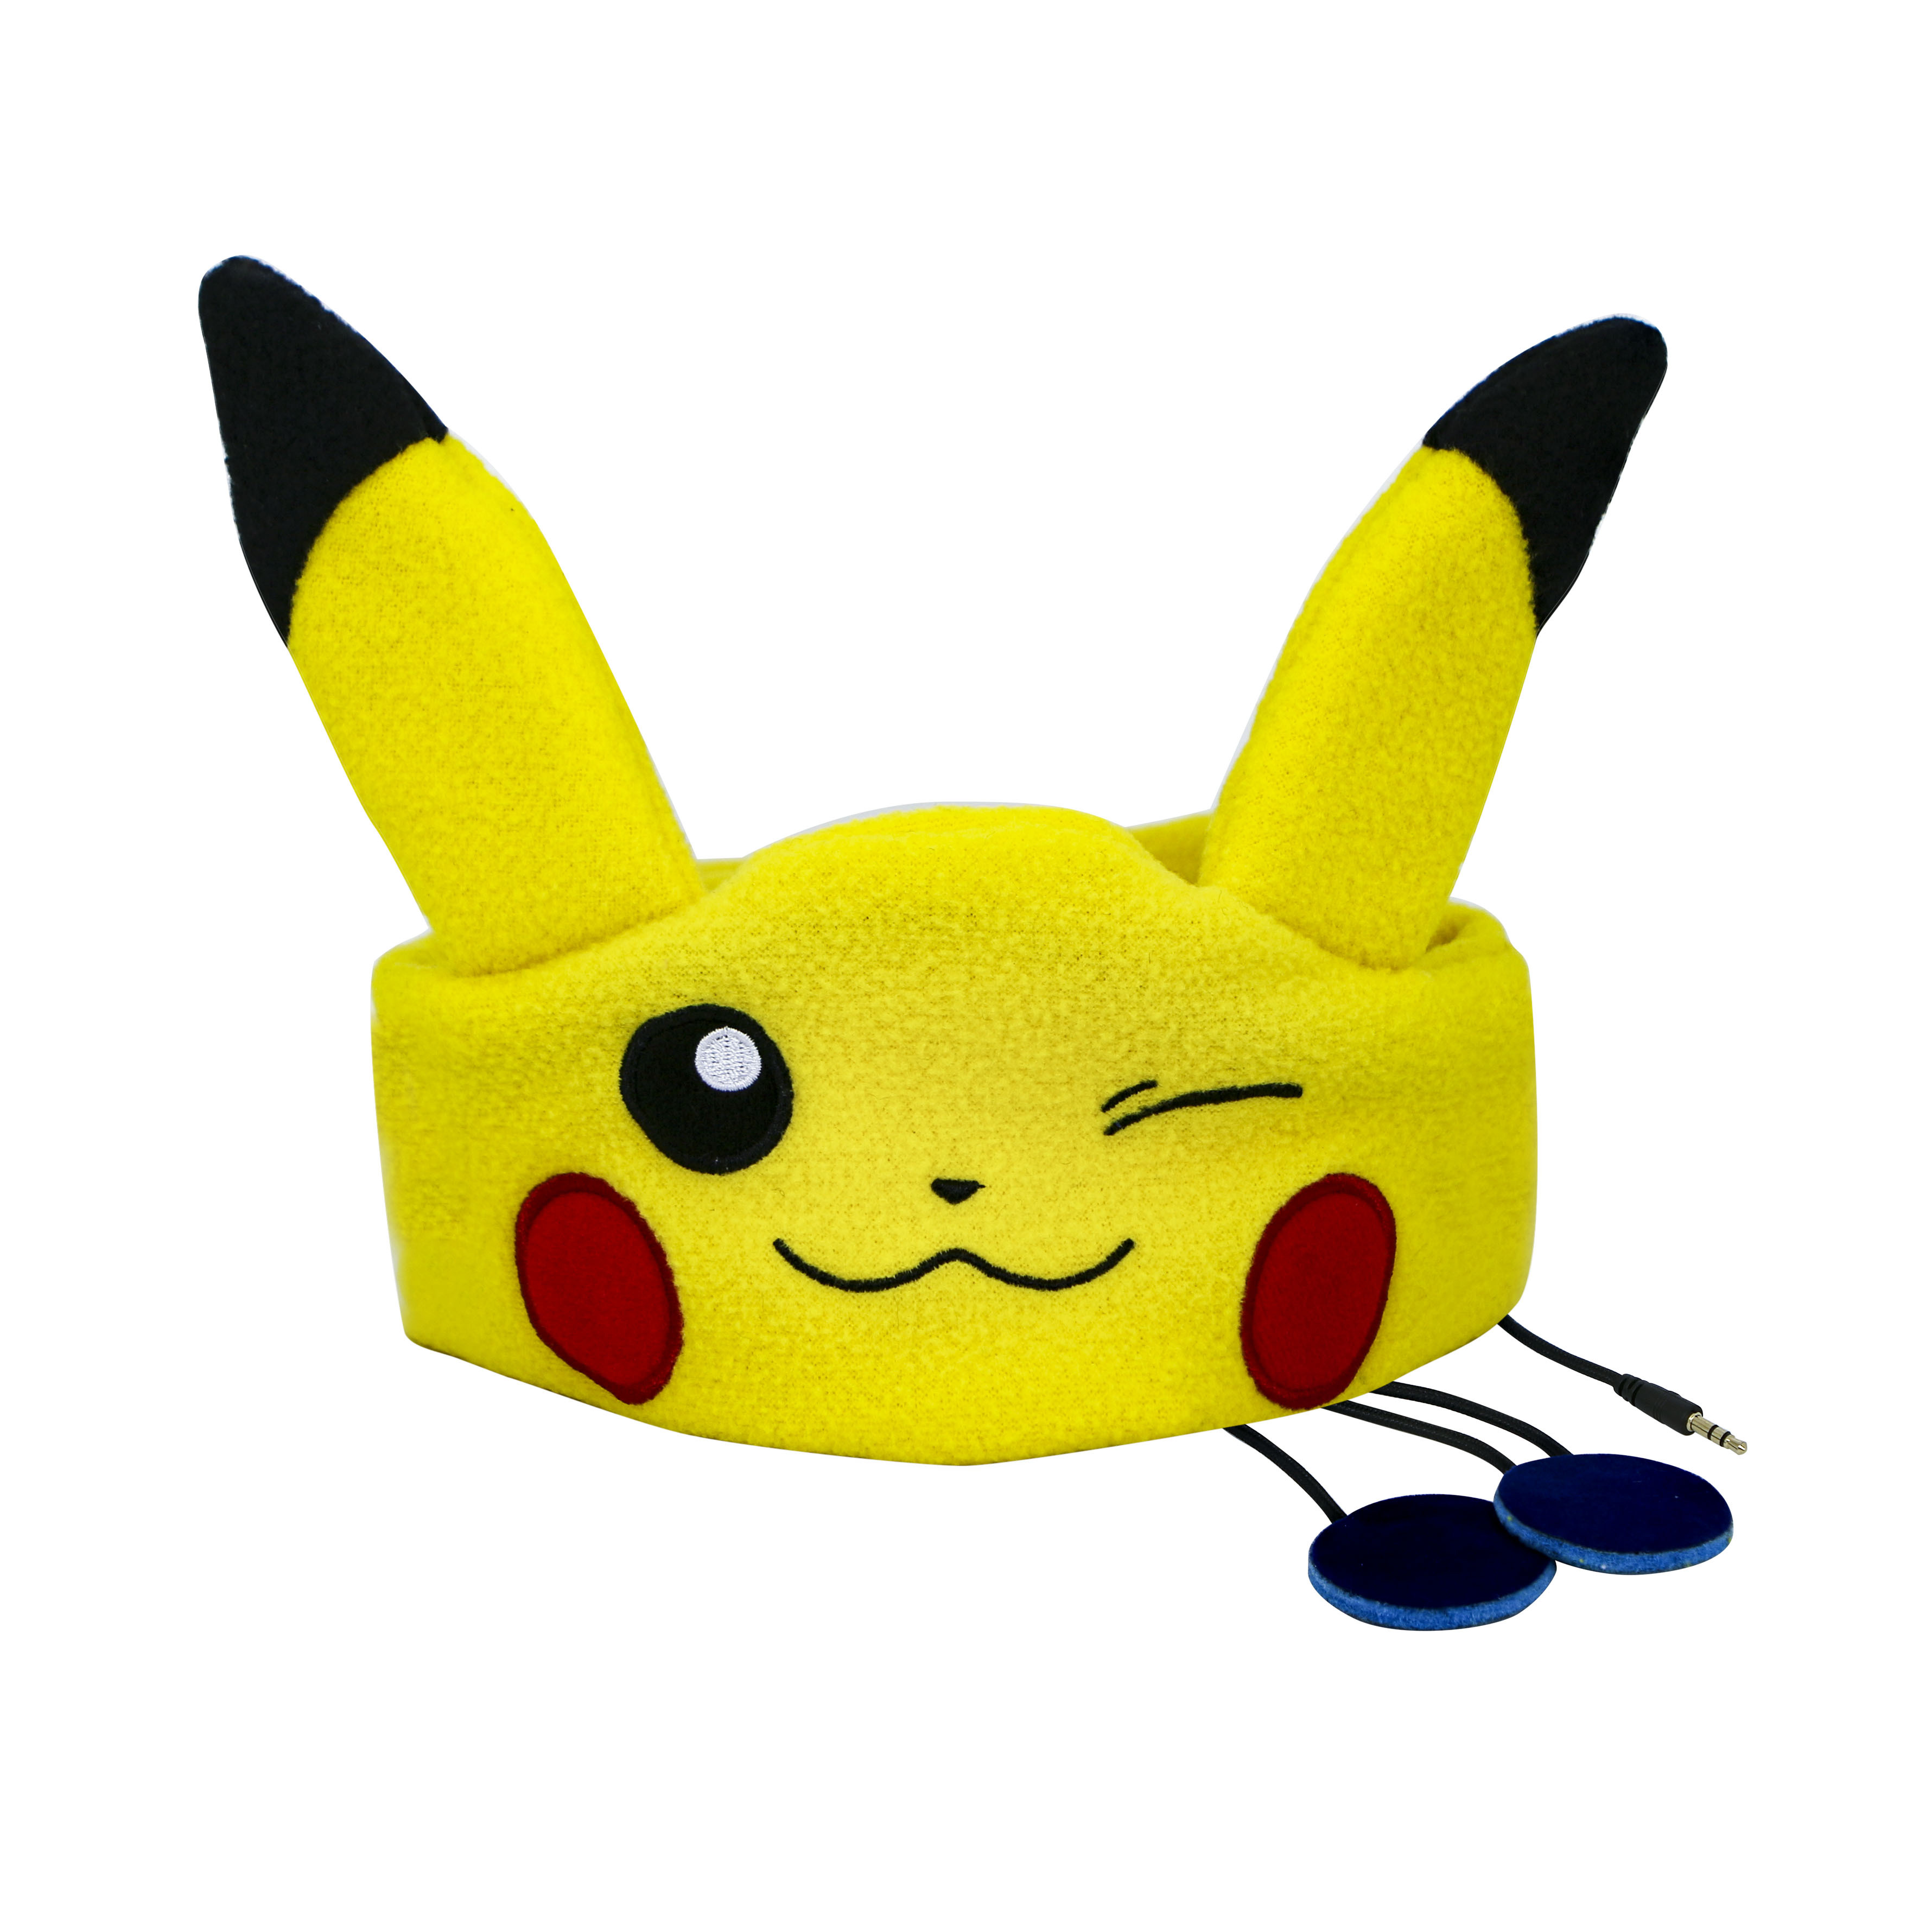 OTL Technologies Pokémon Pikachu zwart, geel, rood